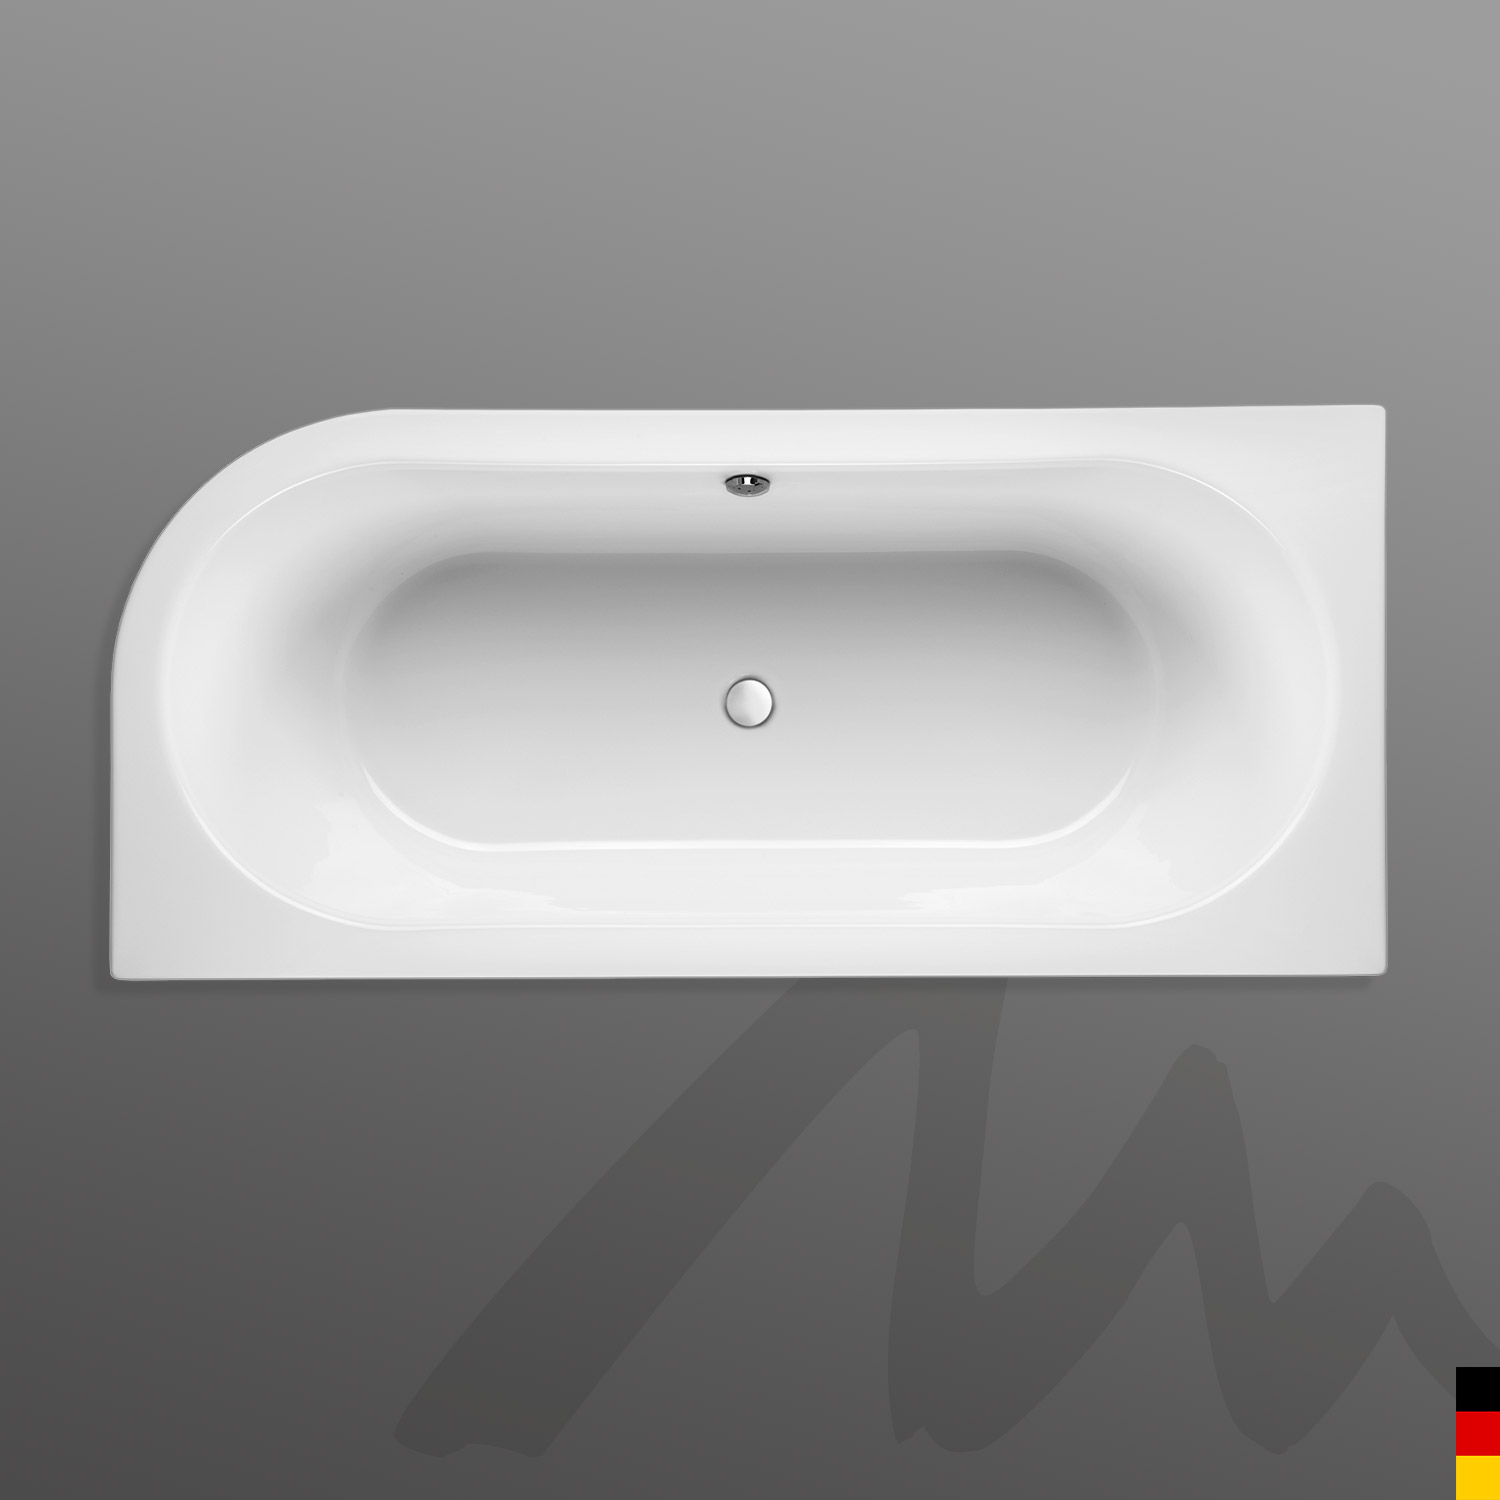 Mauersberger Badewanne Oval Primo 1 - 180/80 duo Ausführung links  180x80x45  Farbe: weiß